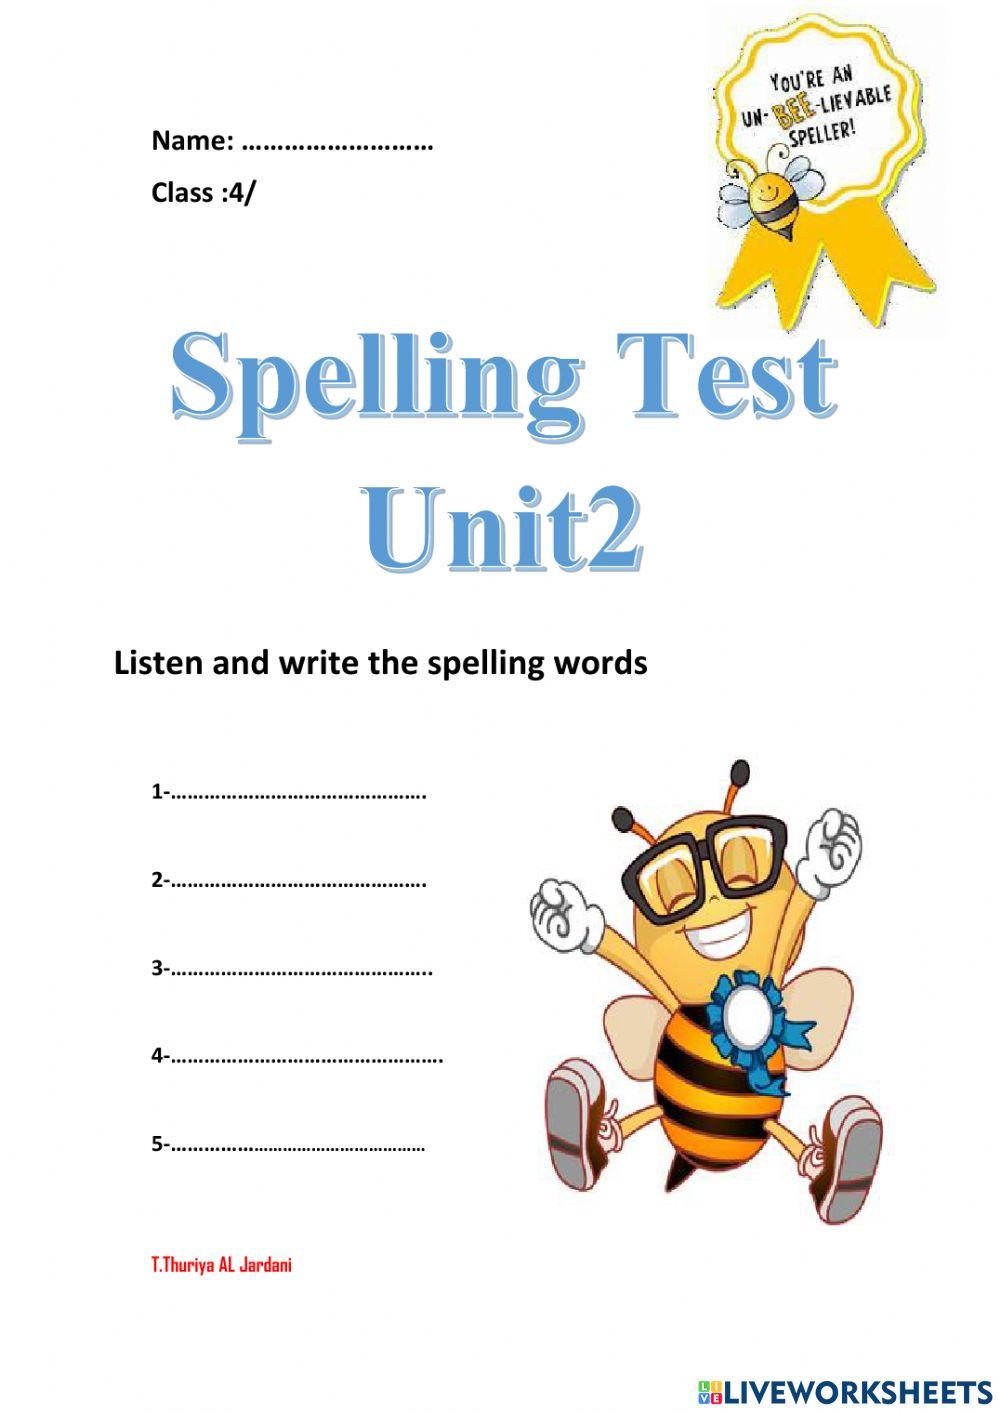 Spelling test1 u2